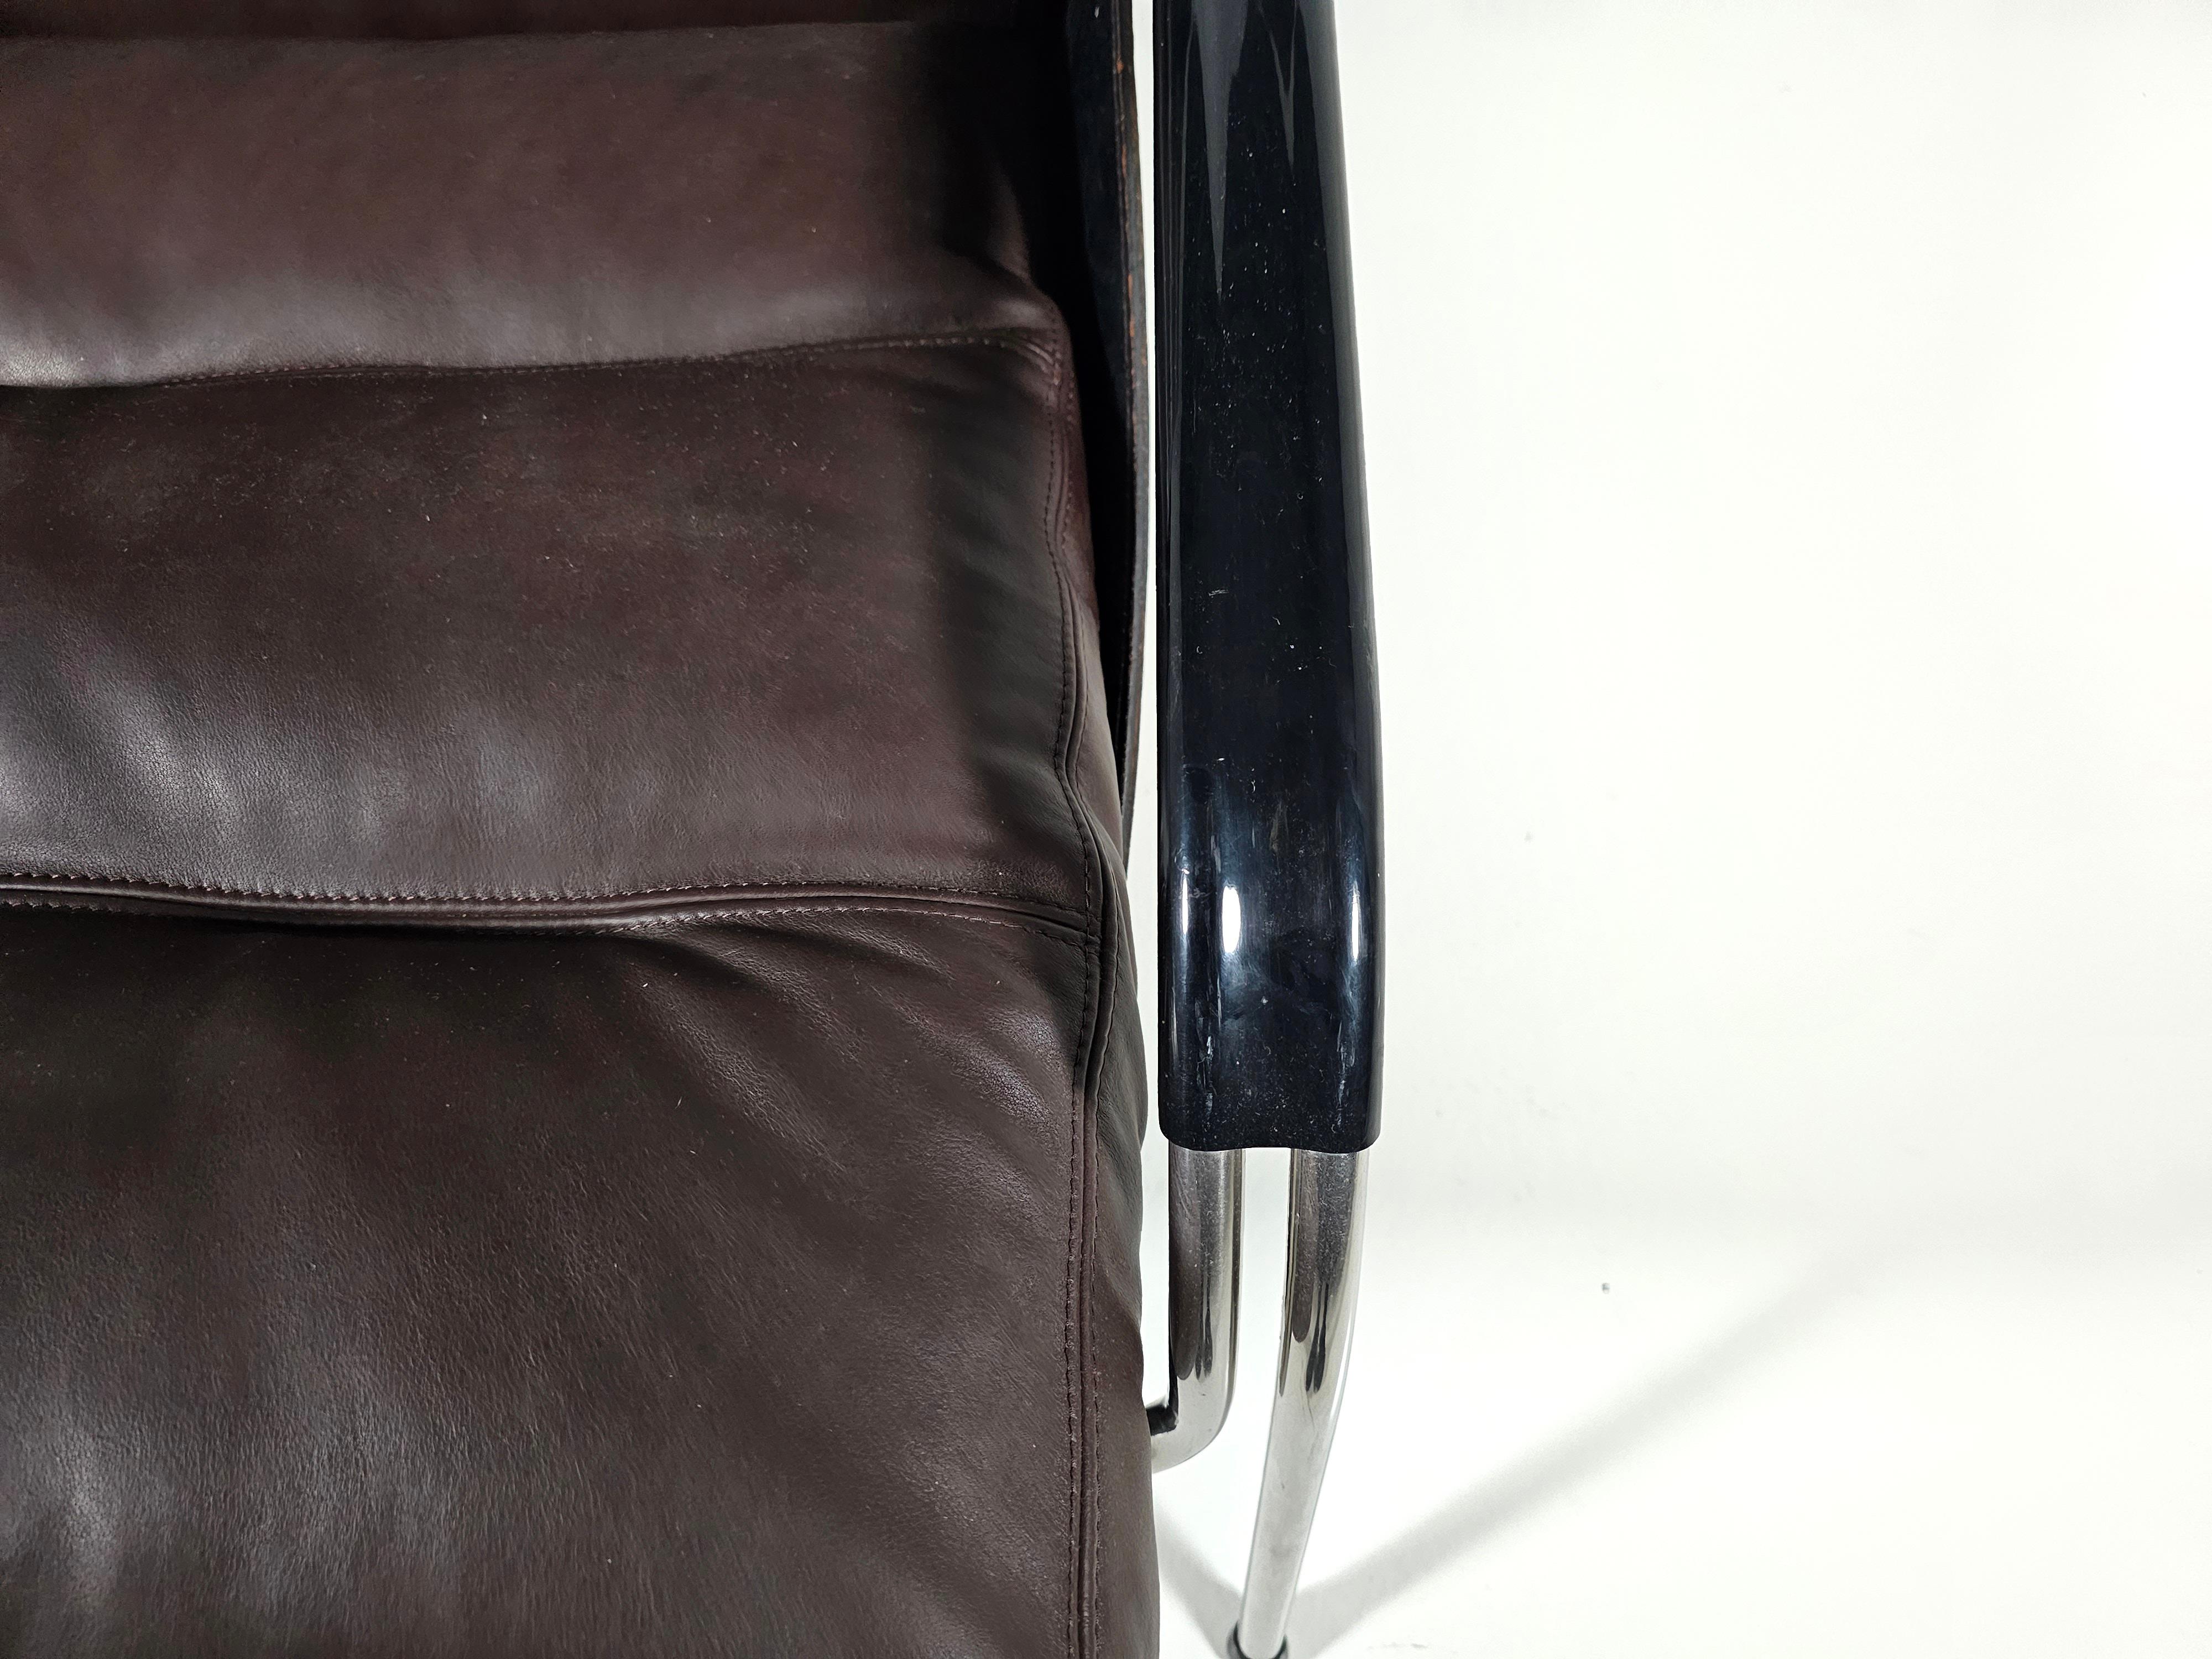  Marco Zanuso Maggiolina lounge chairs in brown and black leather, Zanotta, 1950 For Sale 4